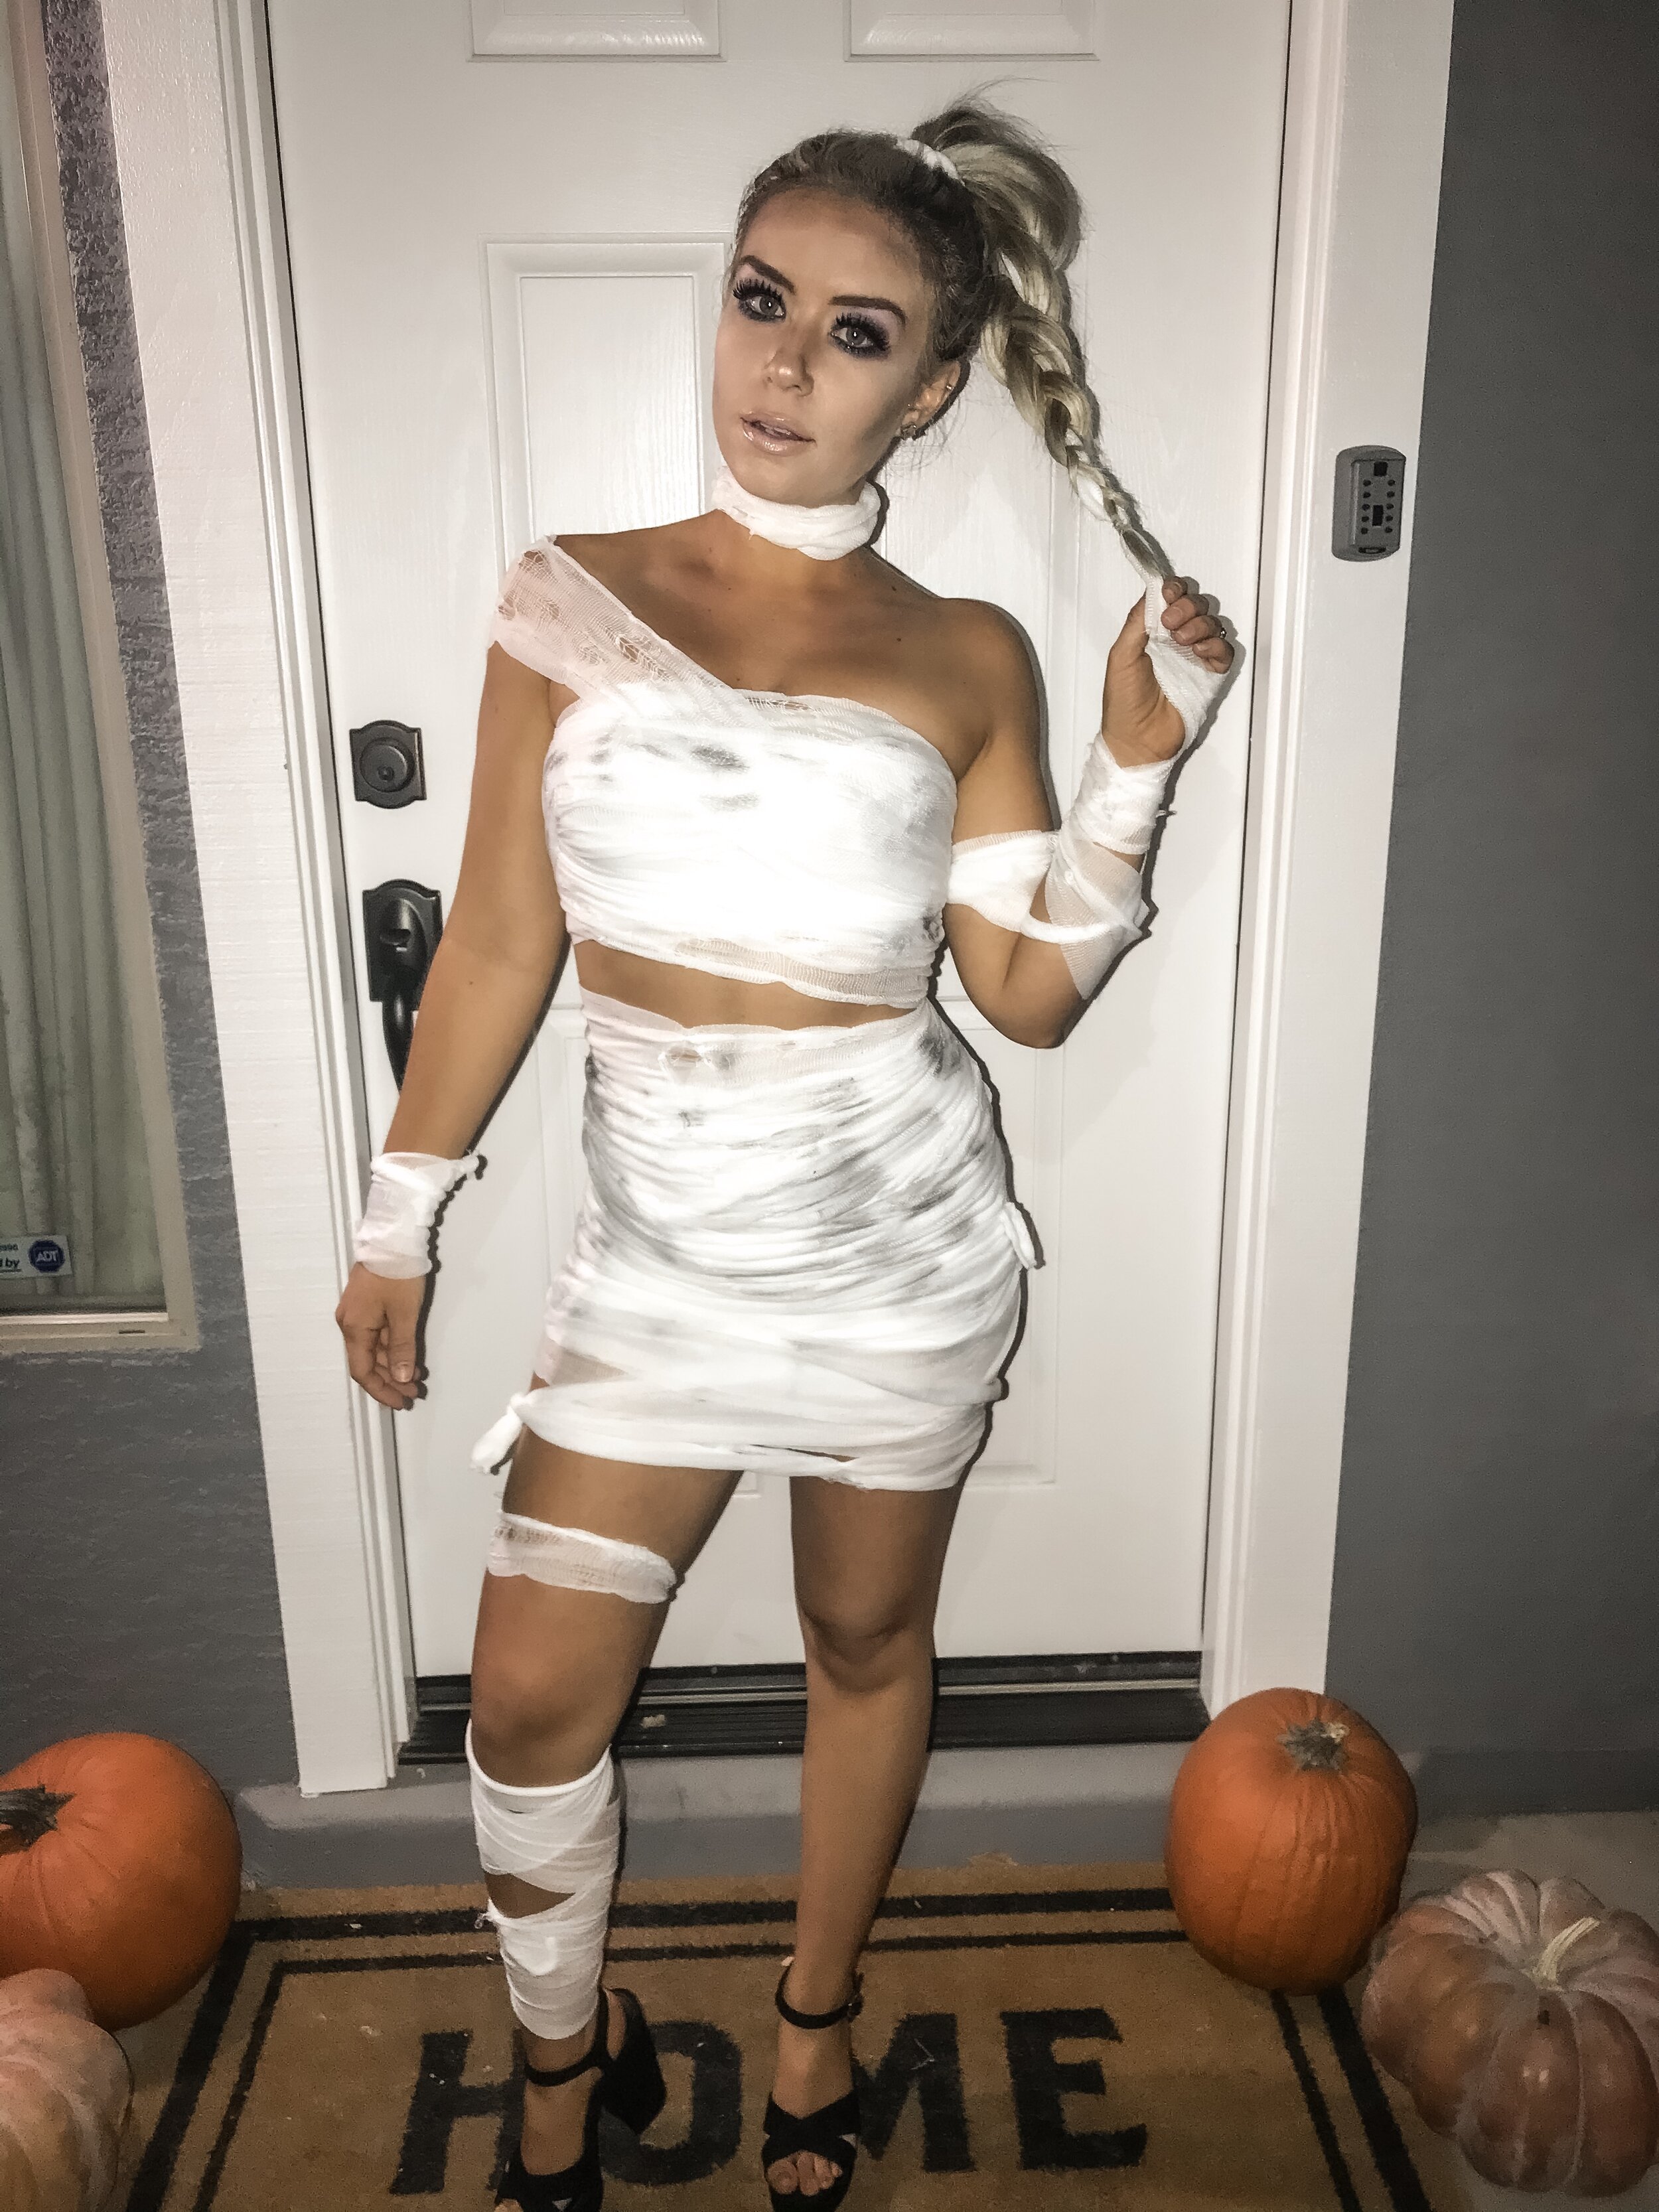 DIY Mummy Costume — Chelsey Brooke Fitness pic